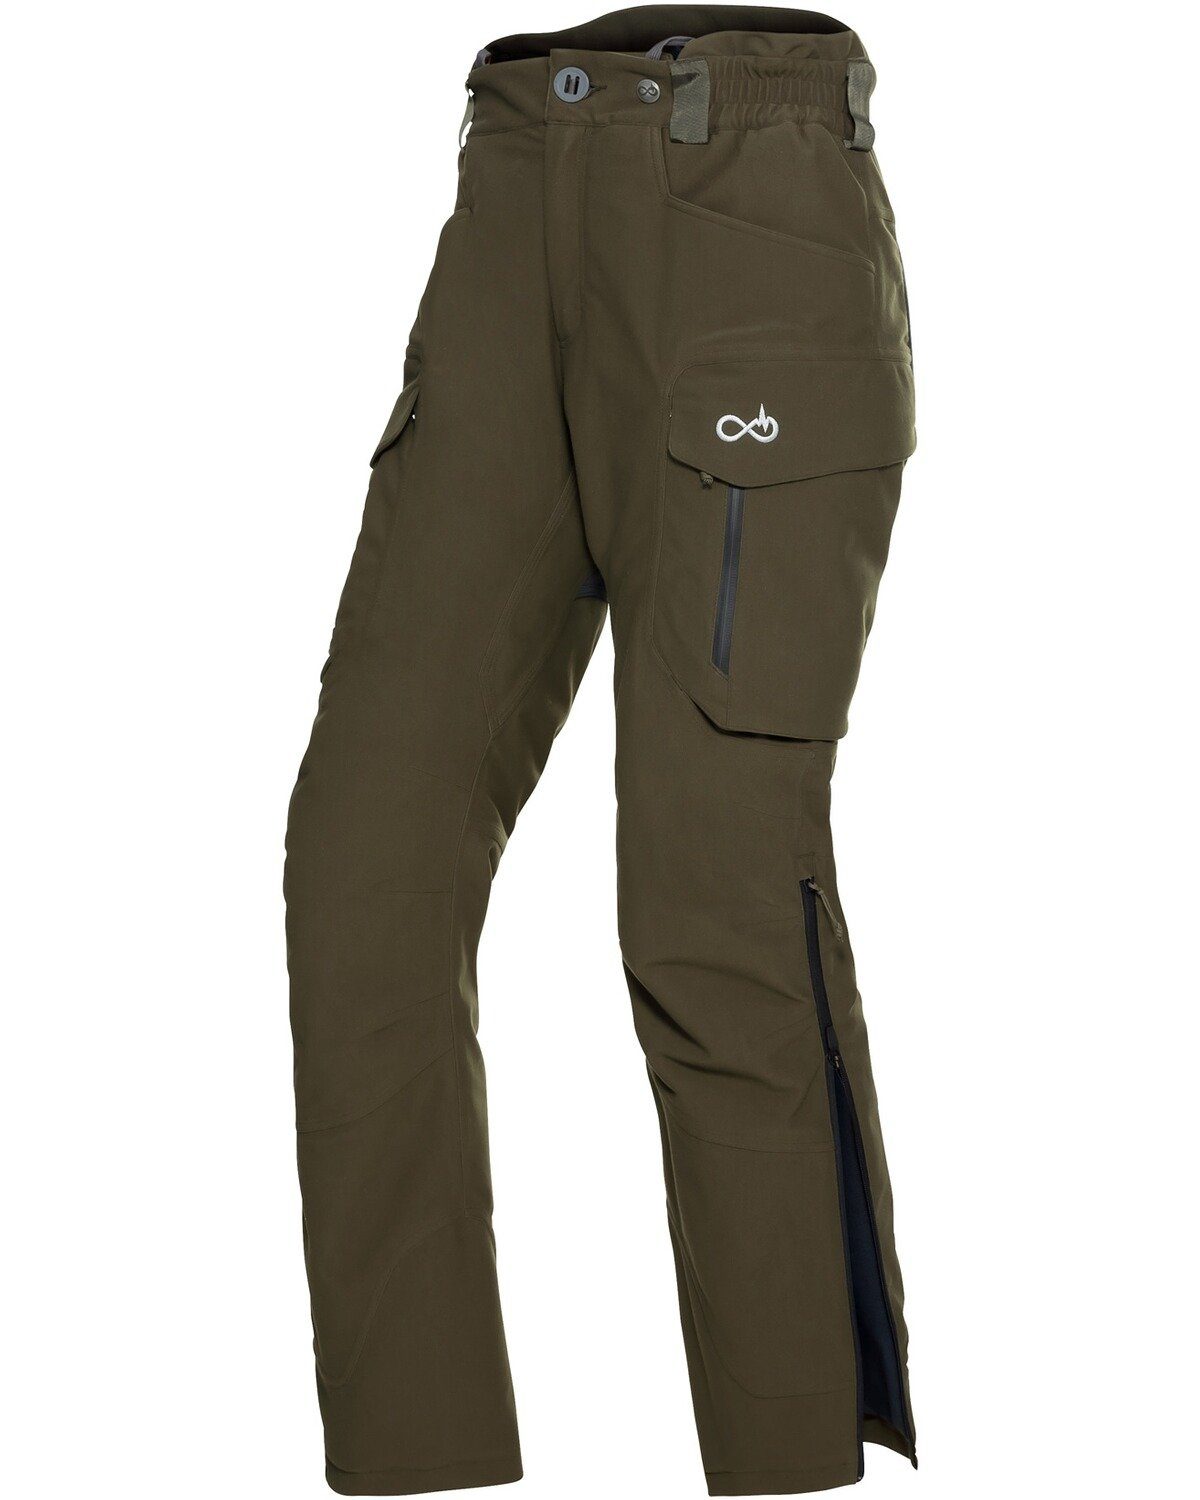 Merkel Gear Outdoorhose Pants G-LOFT® WNTR Hose Expedition